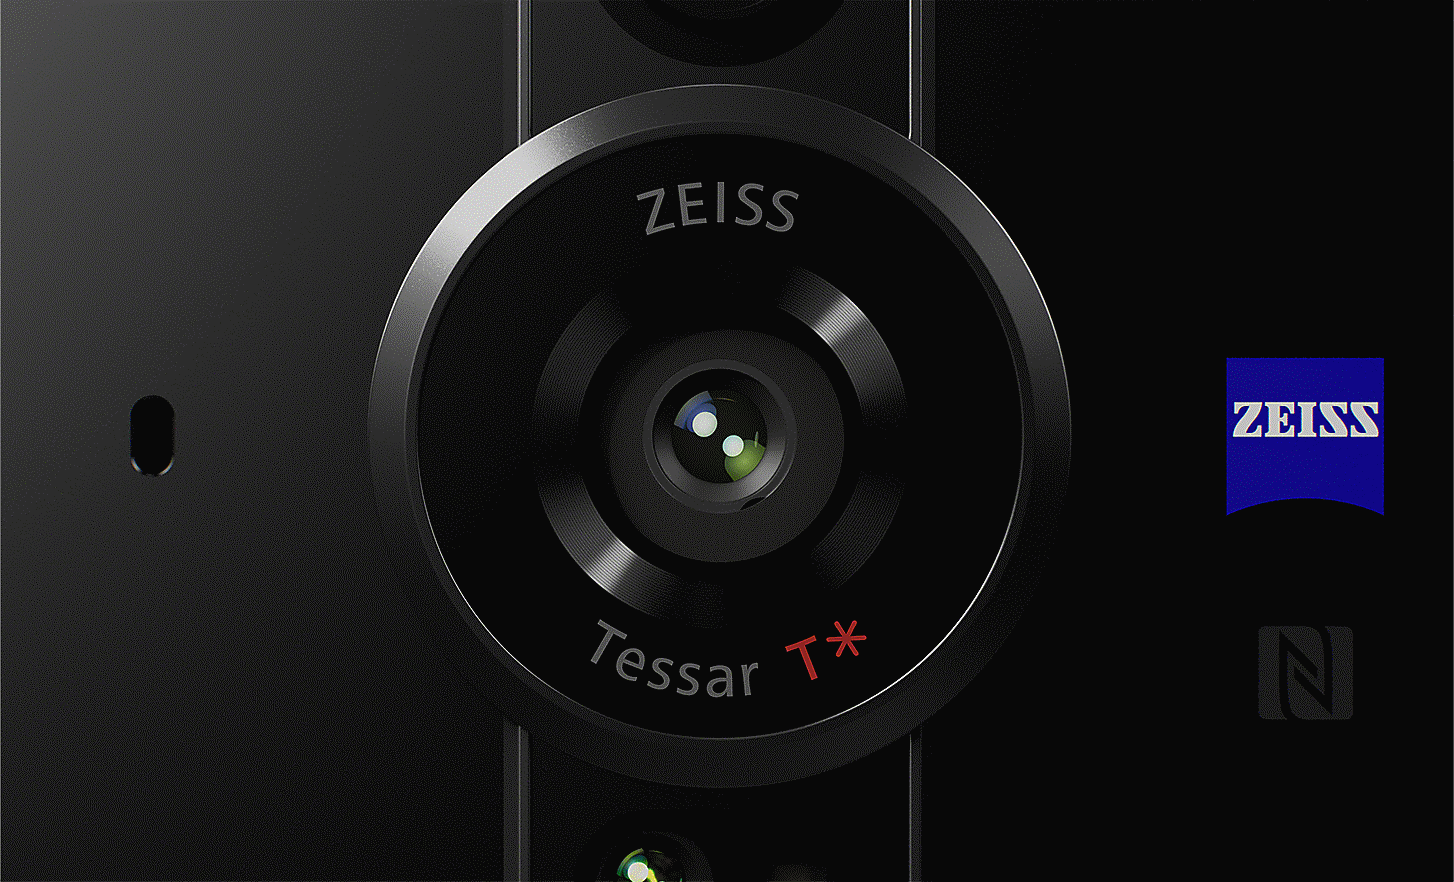 Prim-plan cu obiectivul ZEISS Tessar T* cu sigla ZEISS